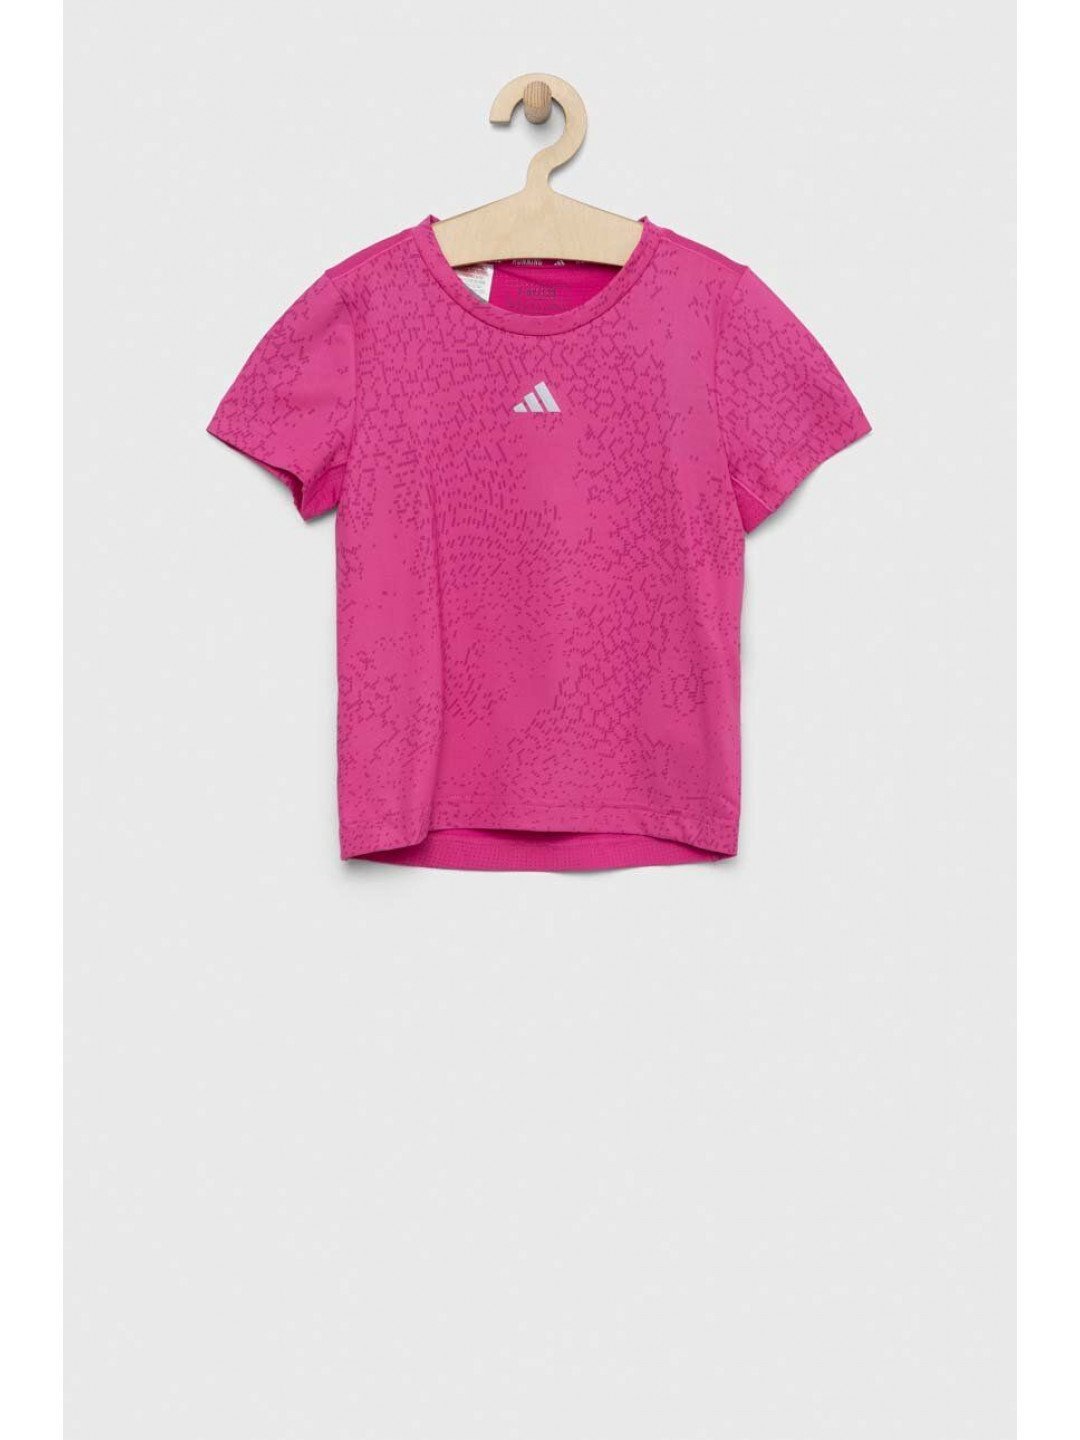 Dětské tričko adidas G RUN TEE fialová barva